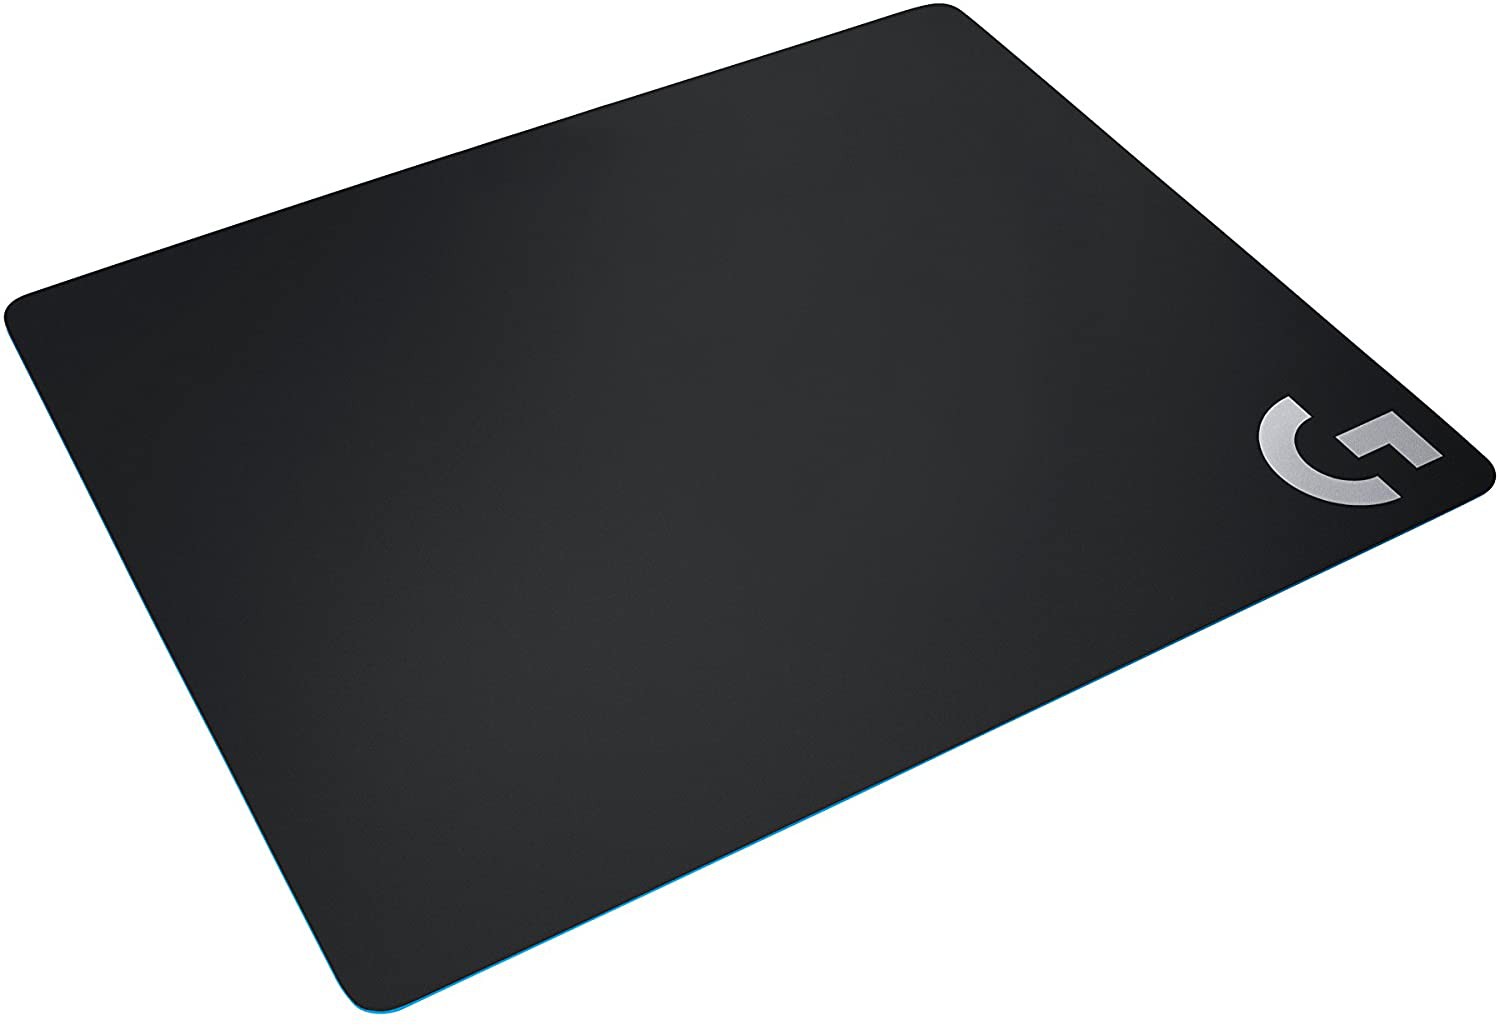 LOGITECH G240 Cloth Gaming Mouse Pad | 280x340x1mm